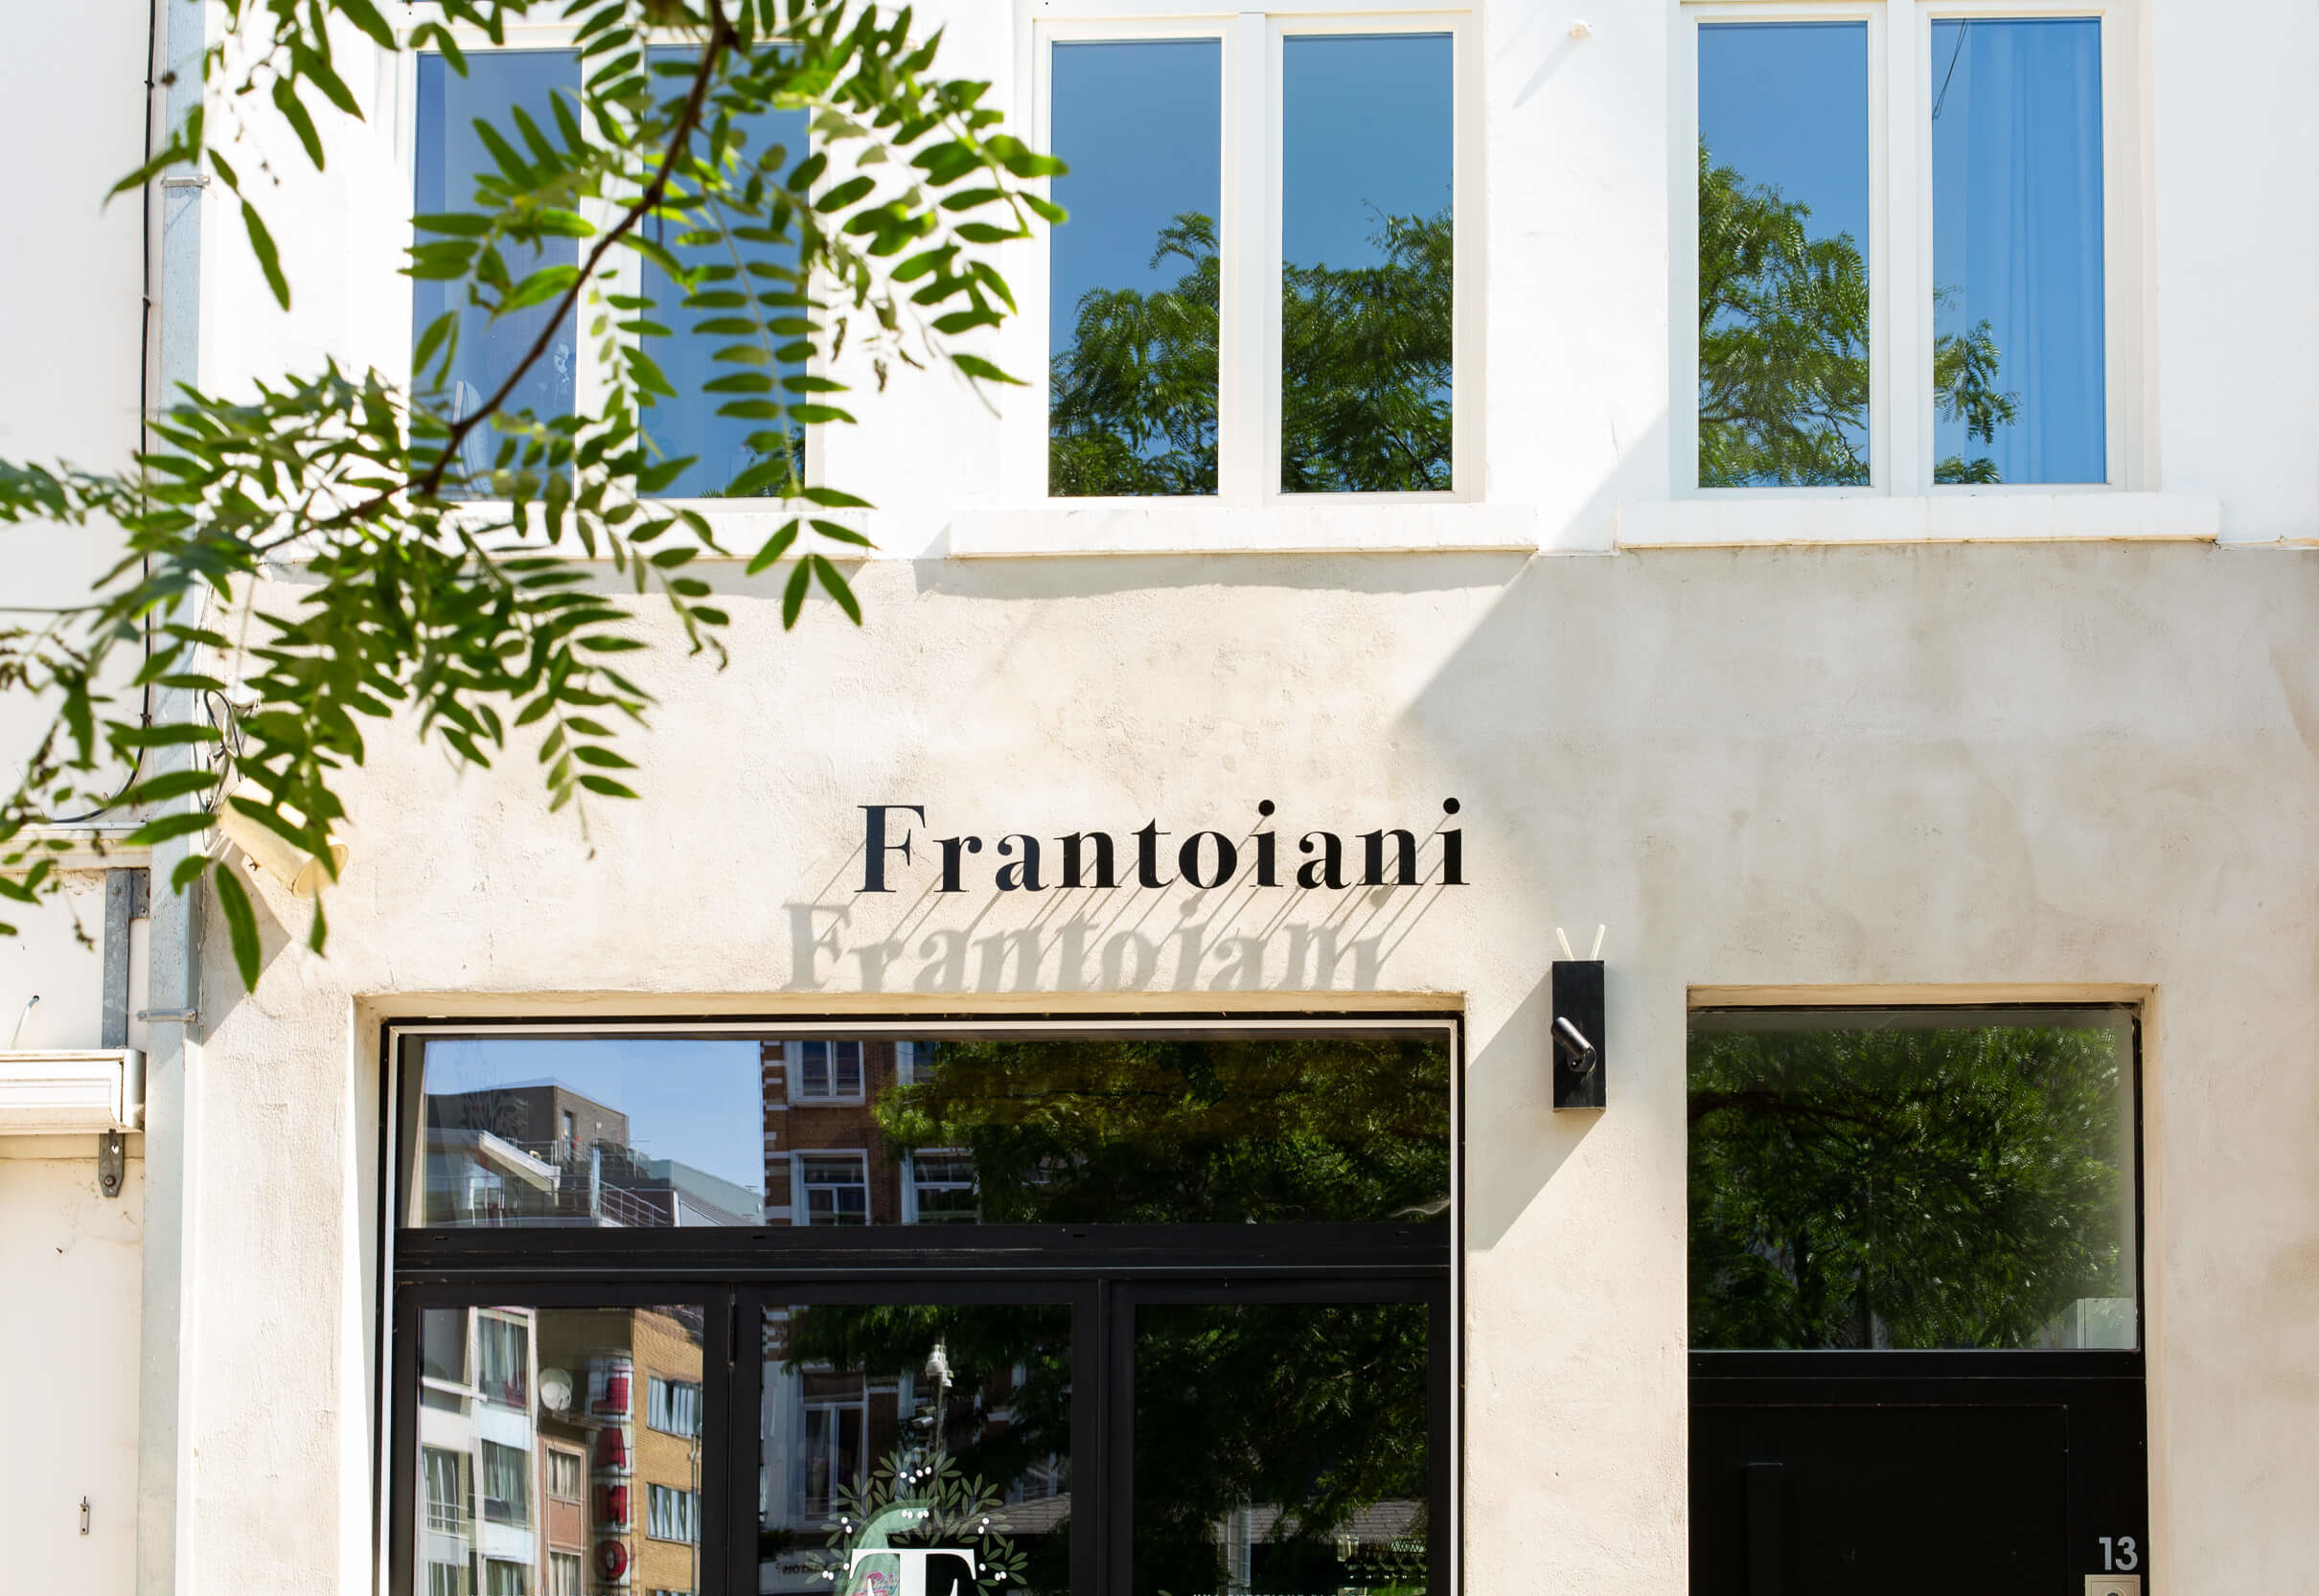 Frantoiani's outdoor signage